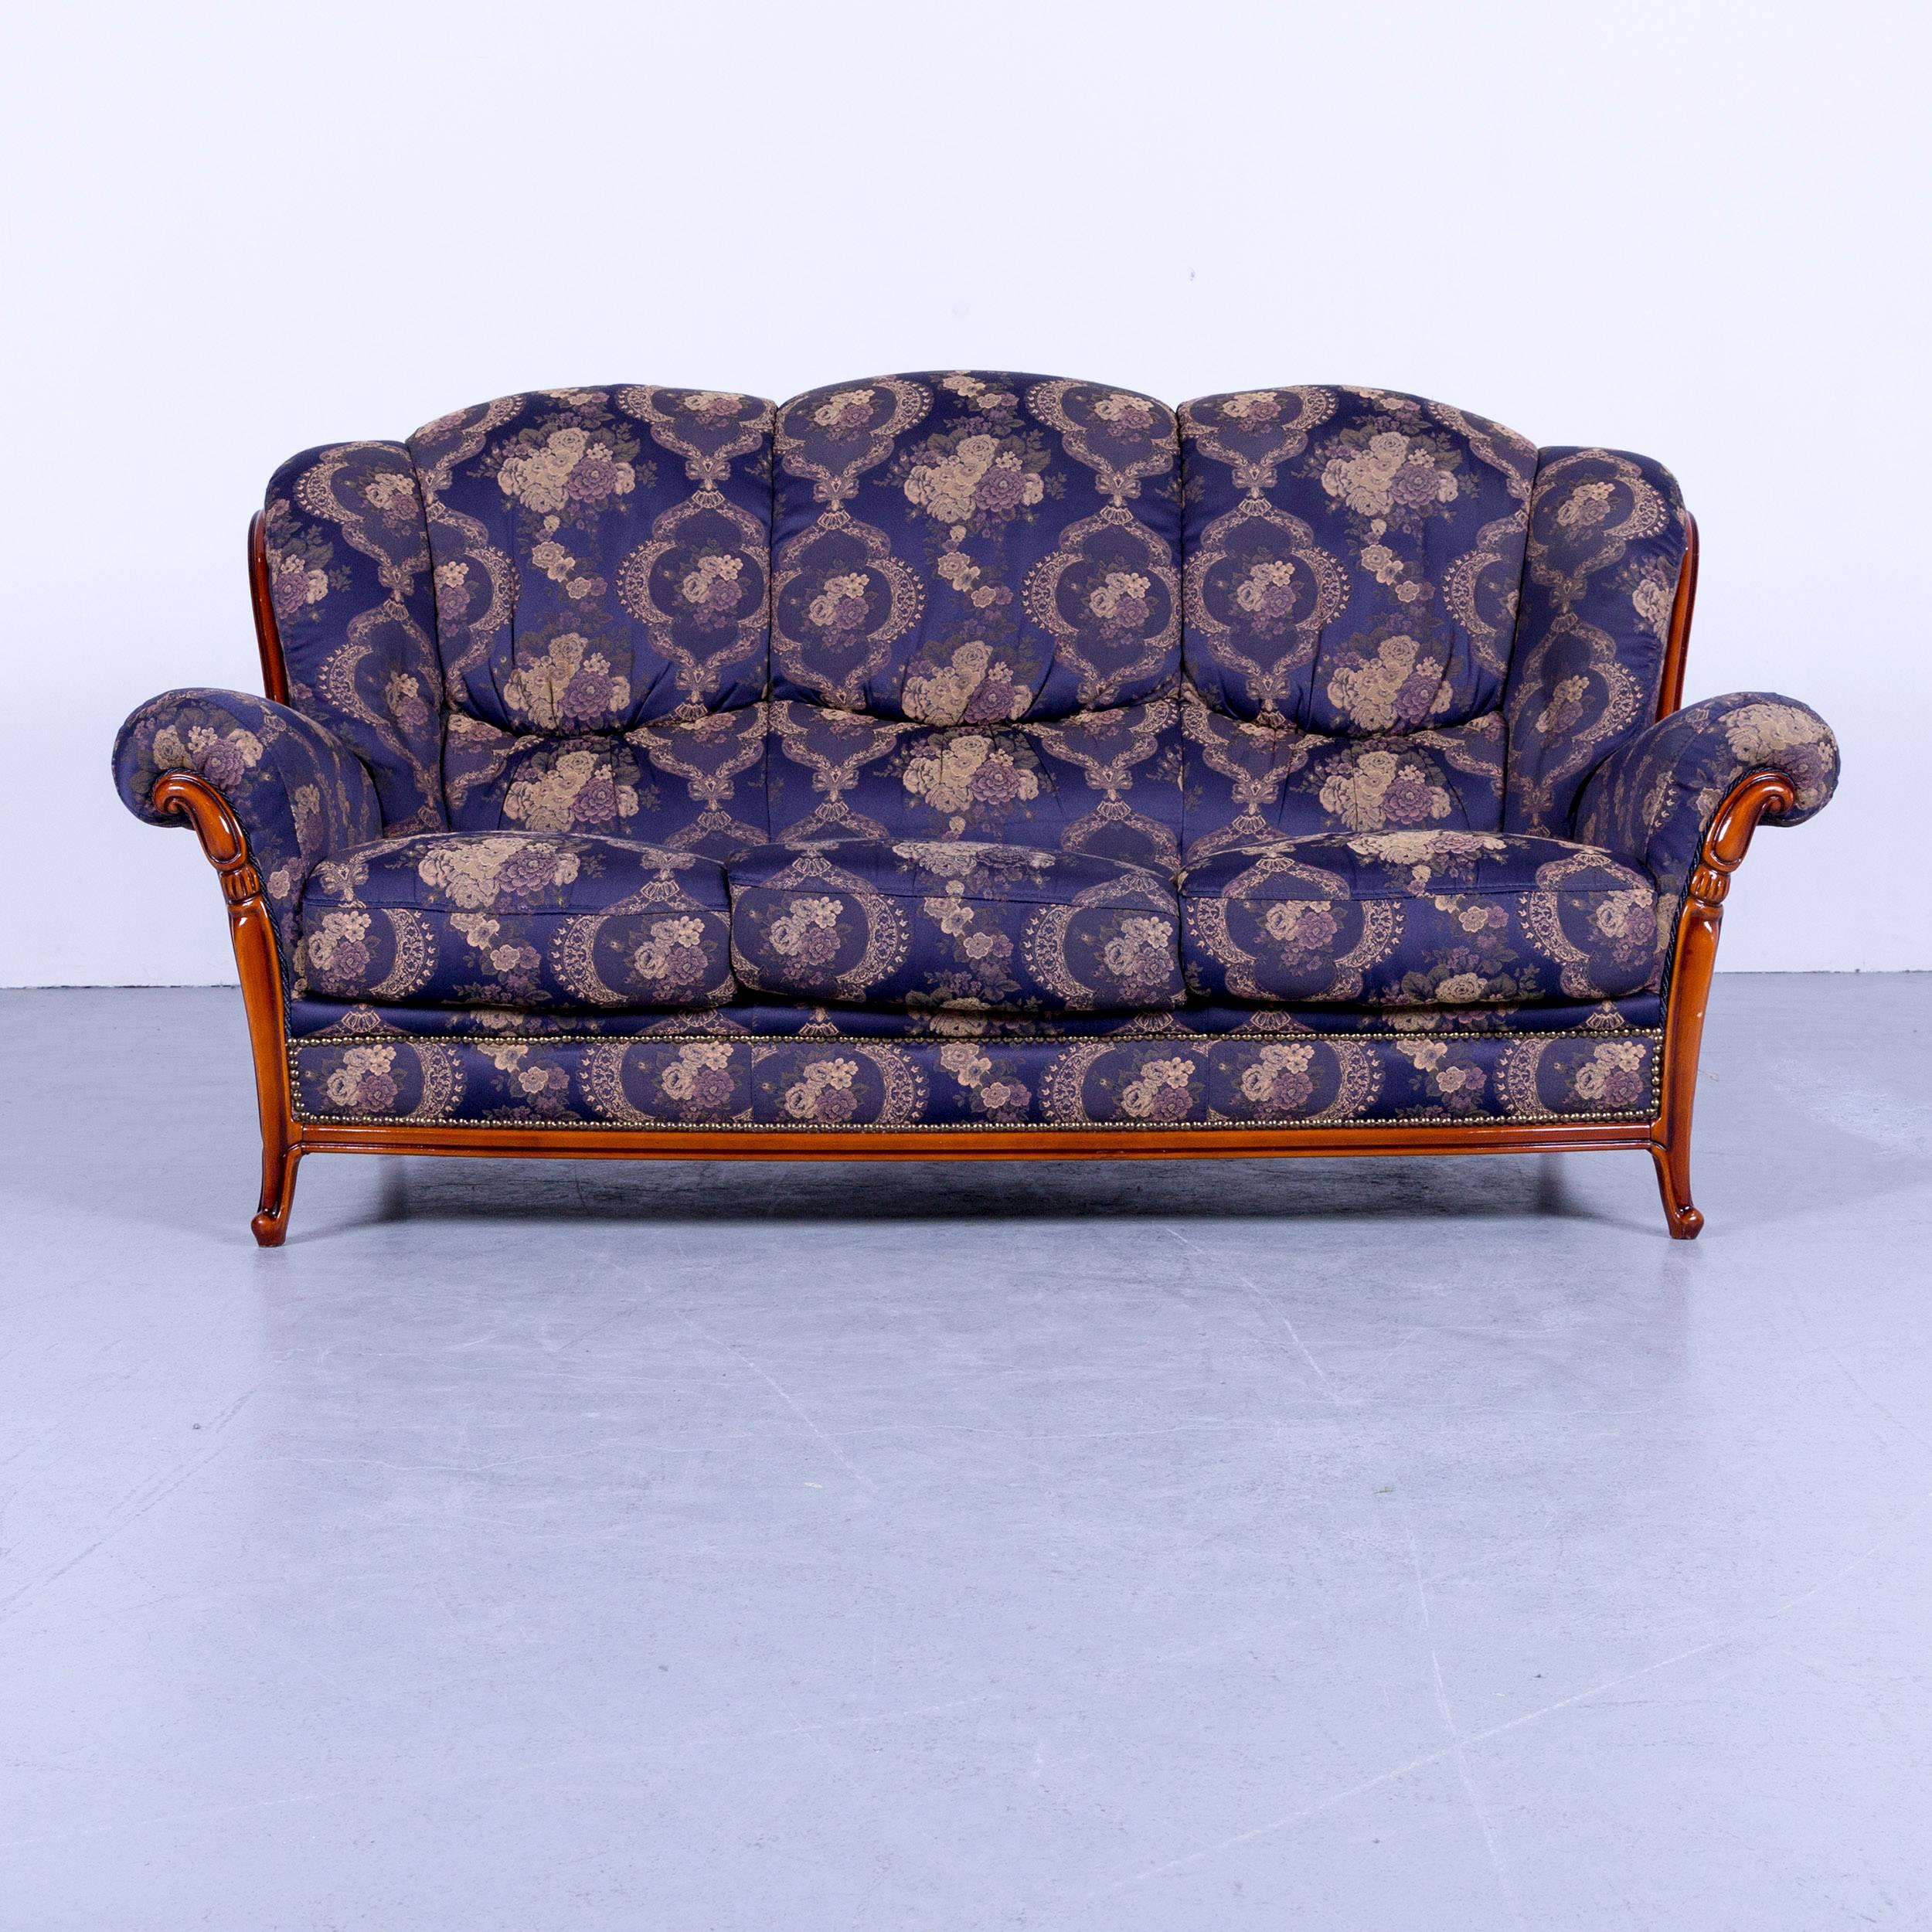 Nieri Palatino designer sofa set purple blue fabric couch 3+2+1+Footstool flowers made in Italy.
 